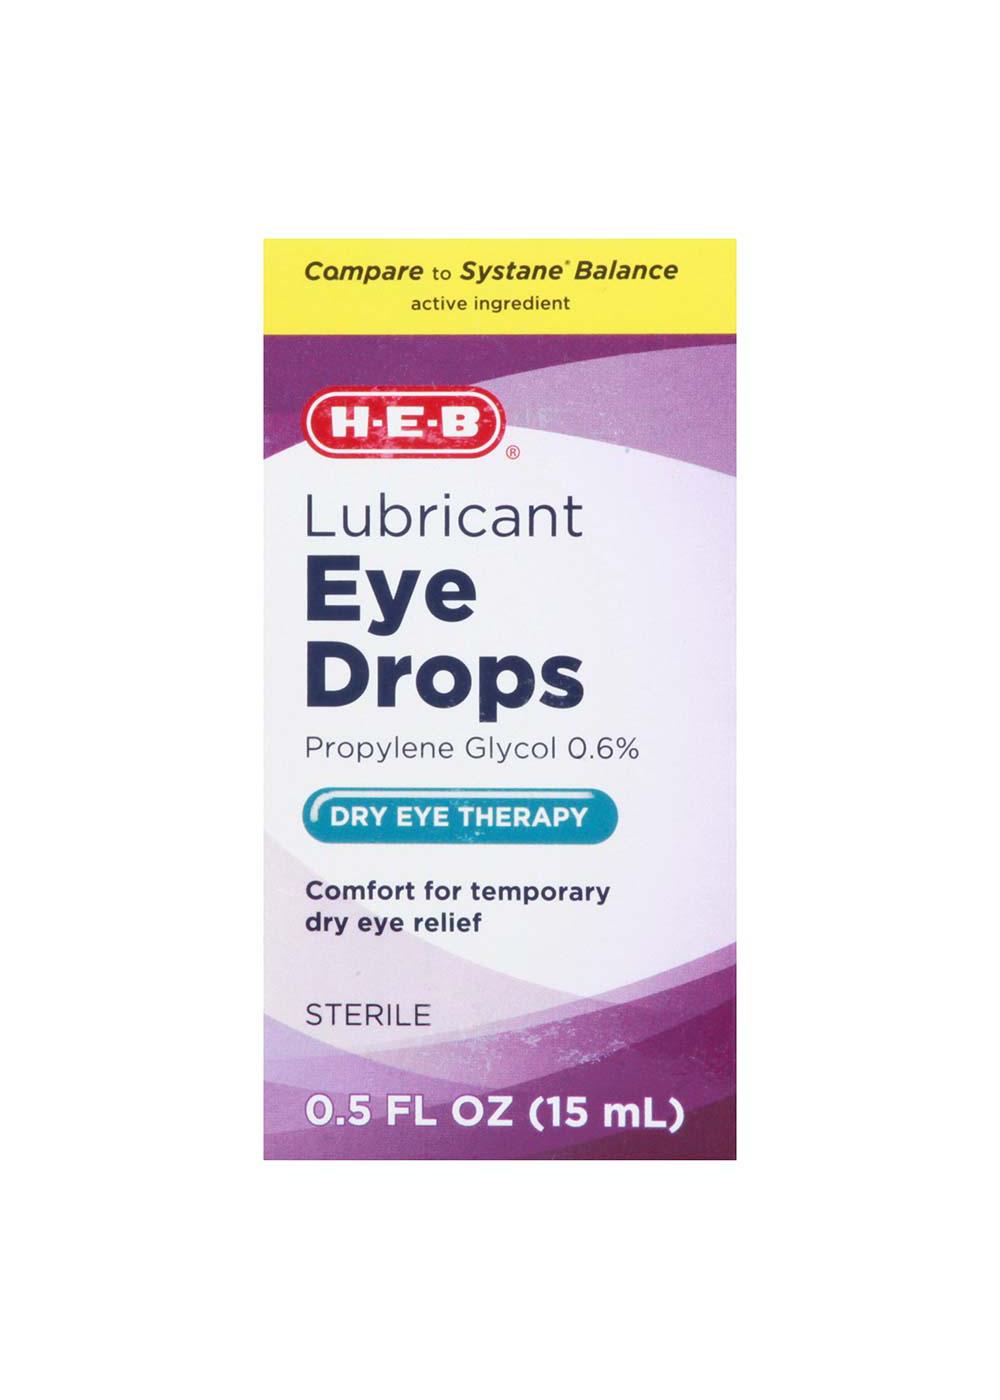 H-E-B Lubricant Eye Drops Dry Eye Therapy